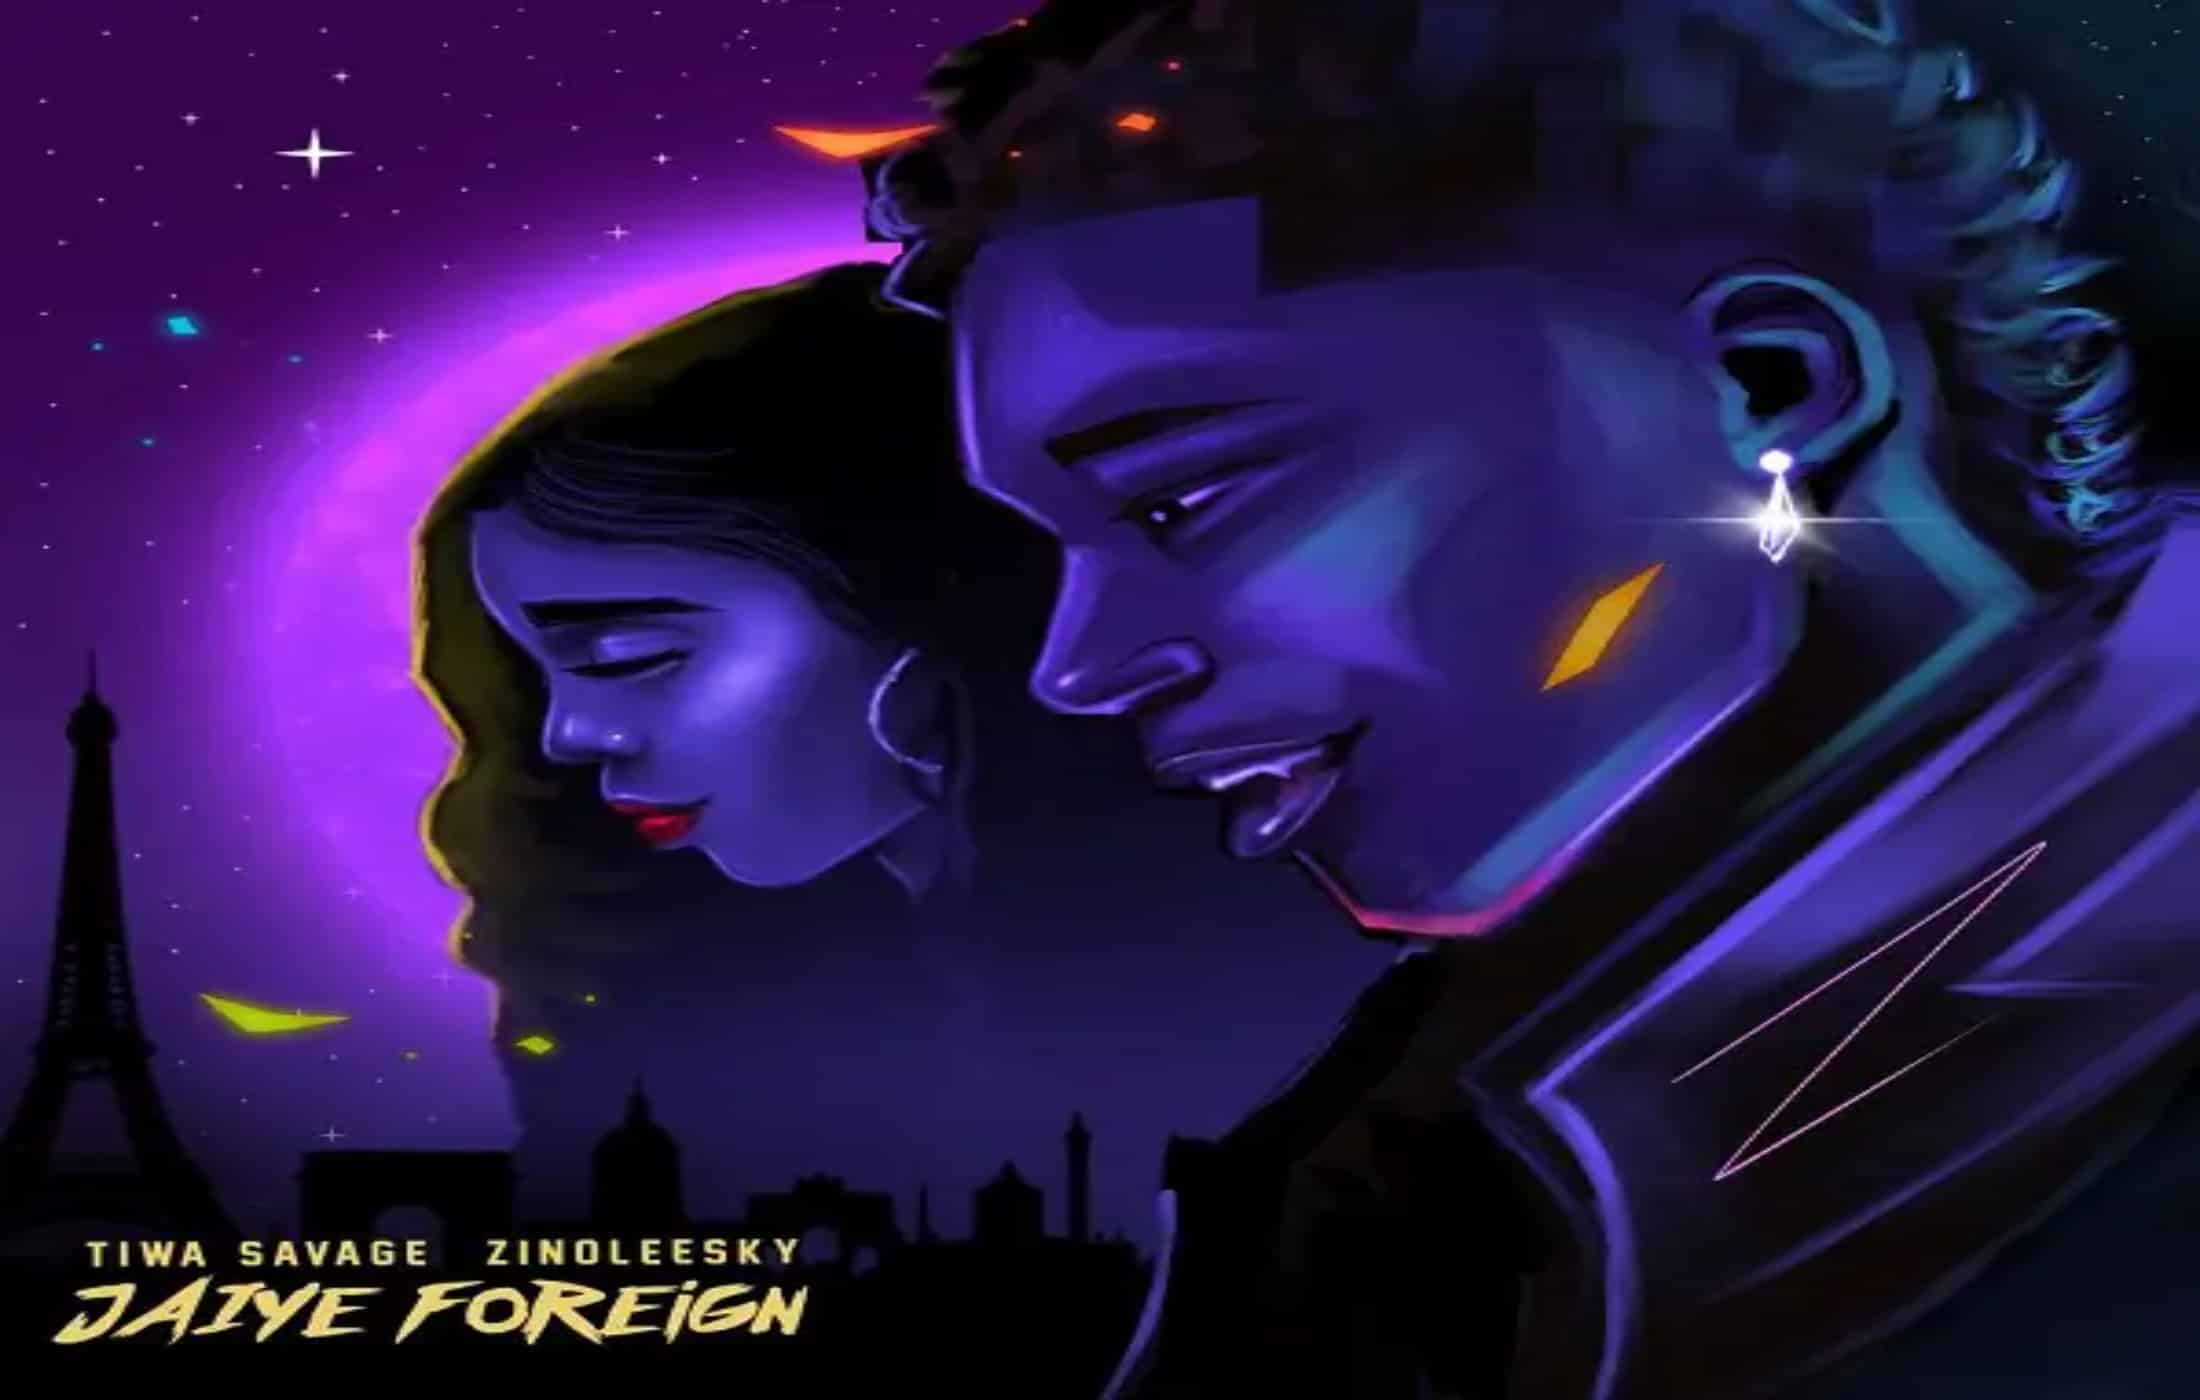 Tiwa savage collaborates with Zinoleesky on new single ‘Jaiye Foreign’ 